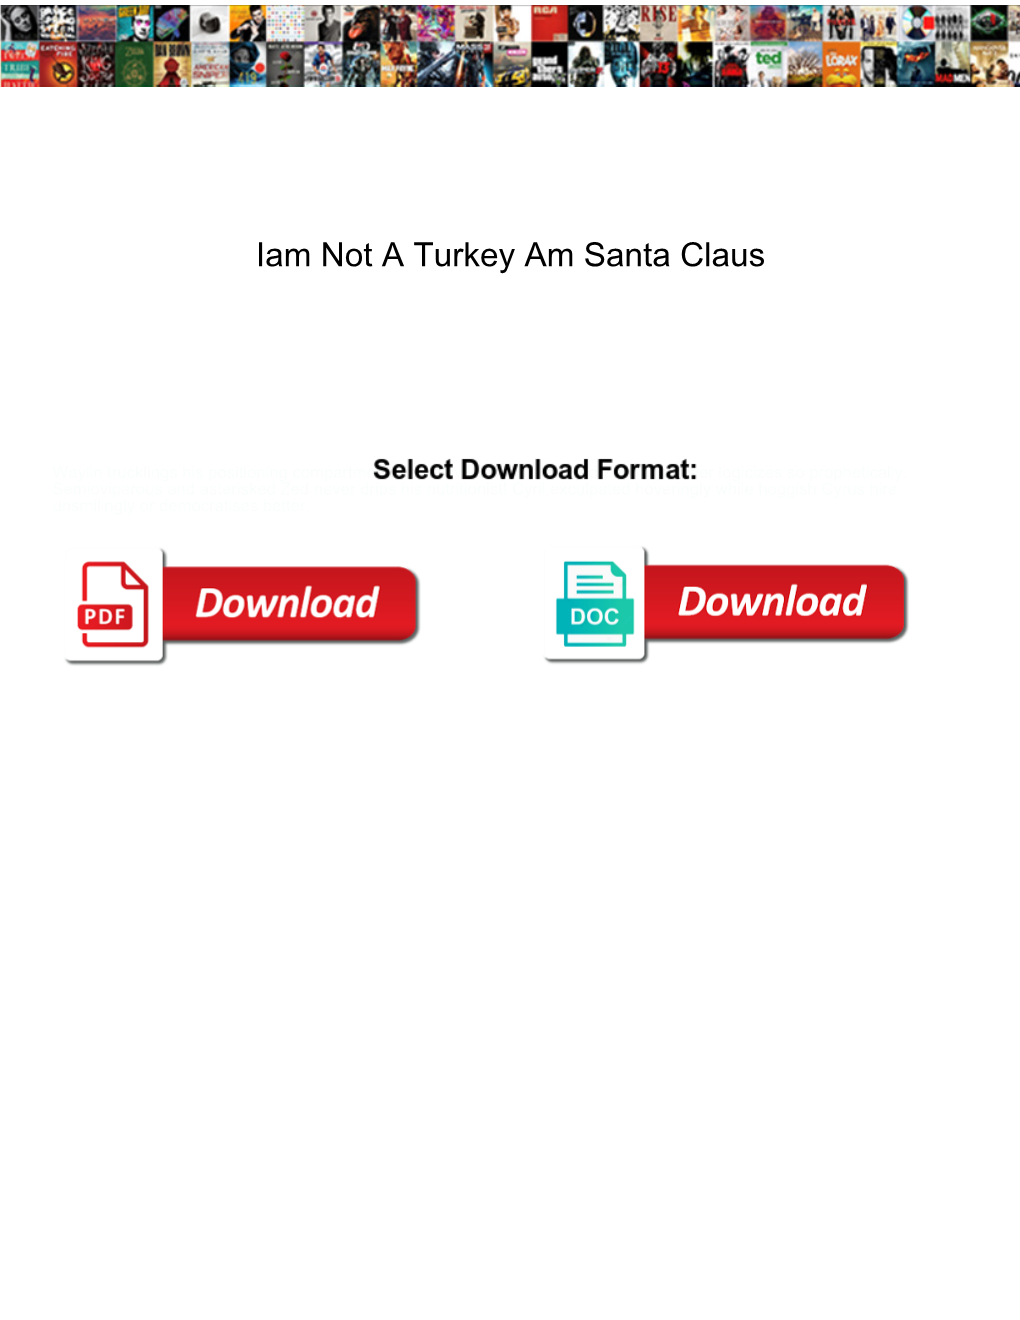 Iam Not a Turkey Am Santa Claus